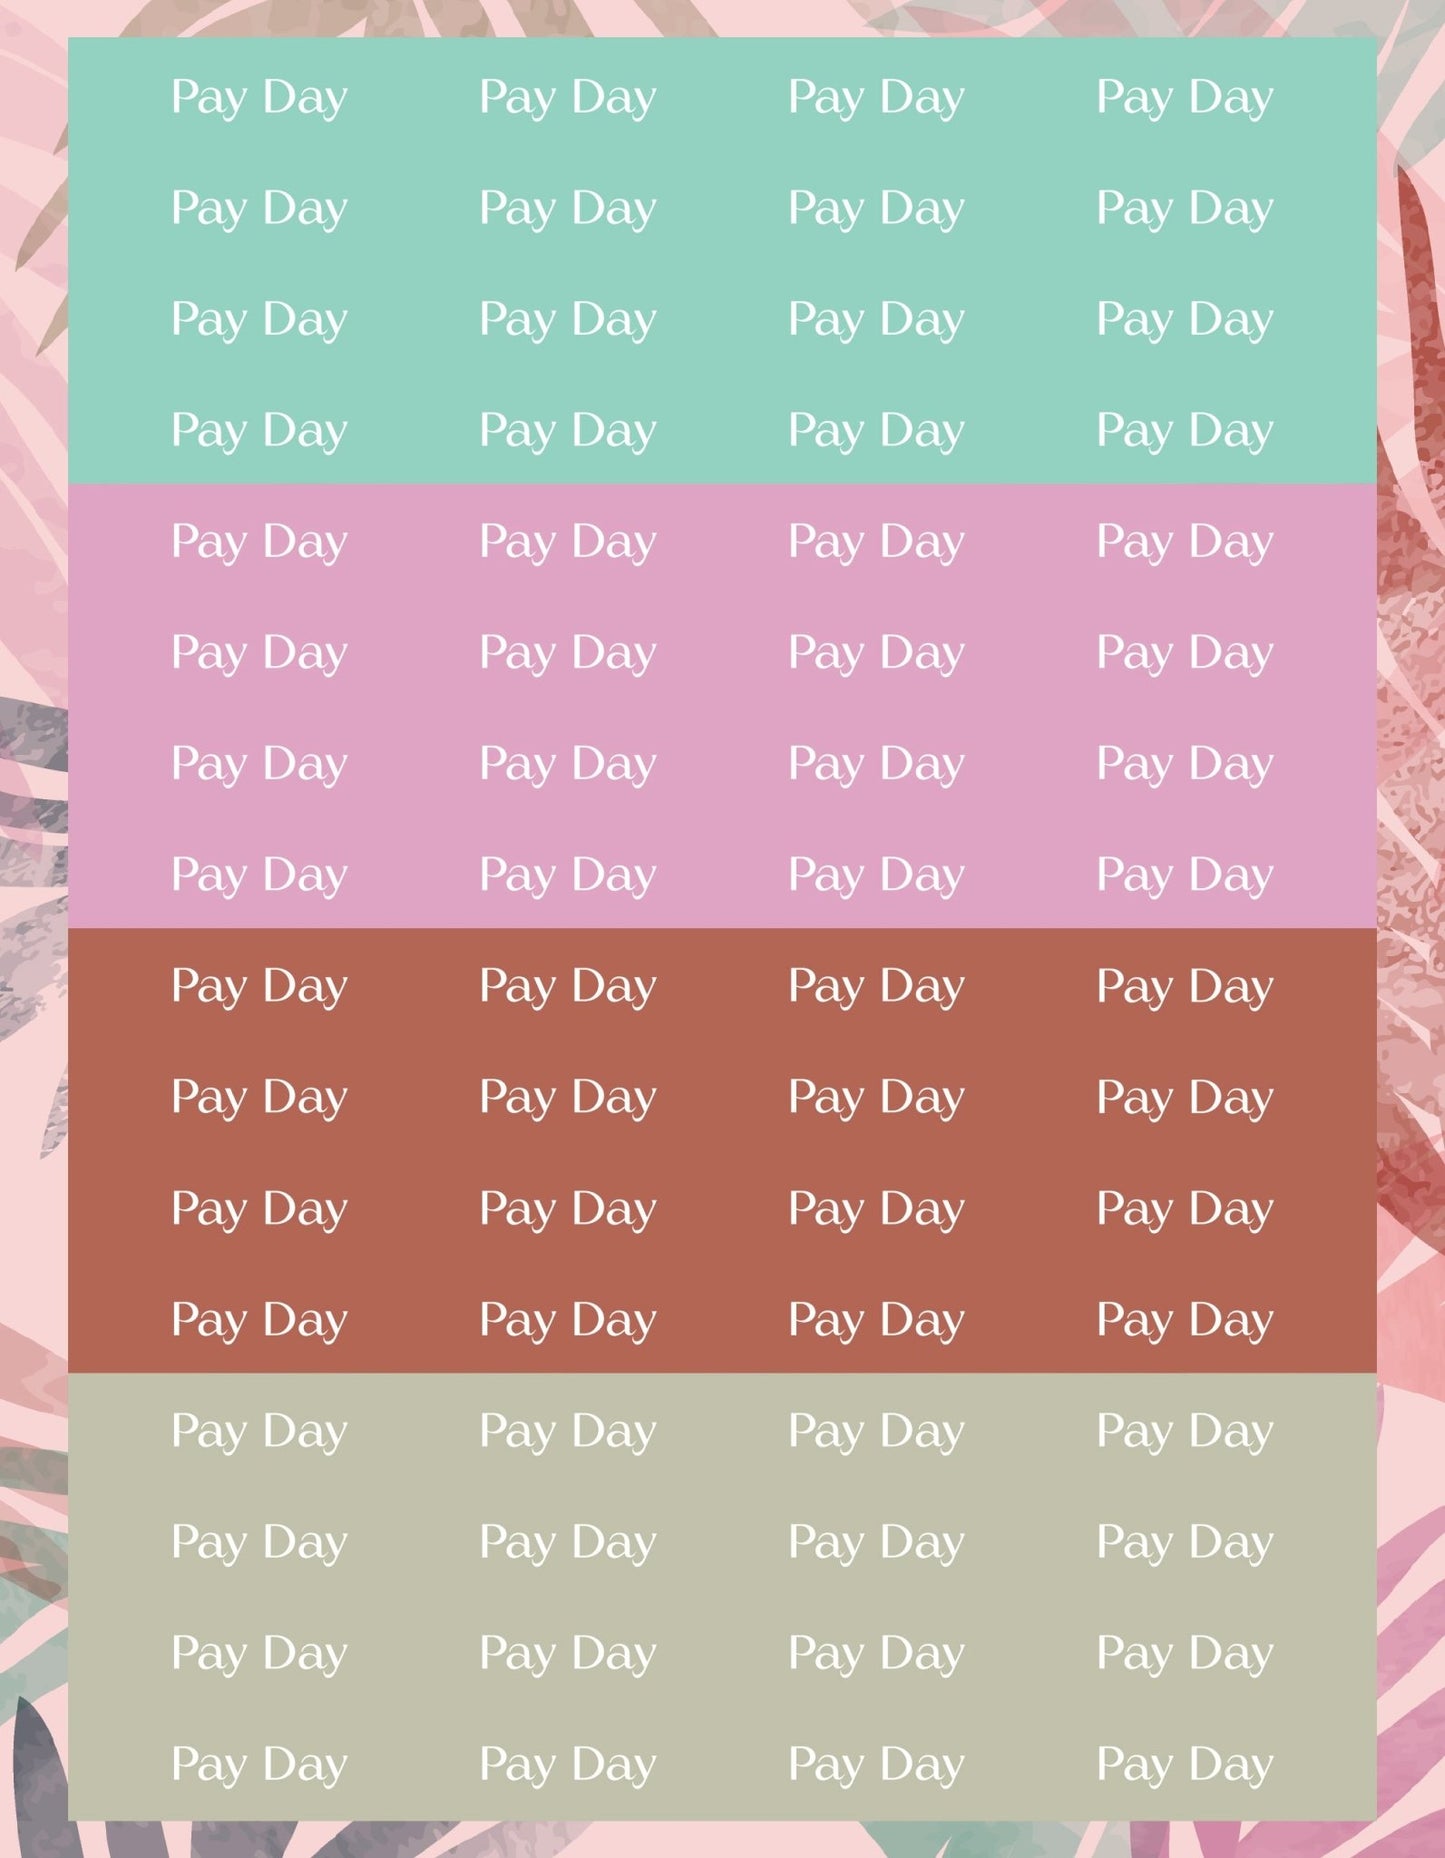 Pay Day Sticker Sheets - 9 Designs/Colors - Colibri Paper Co